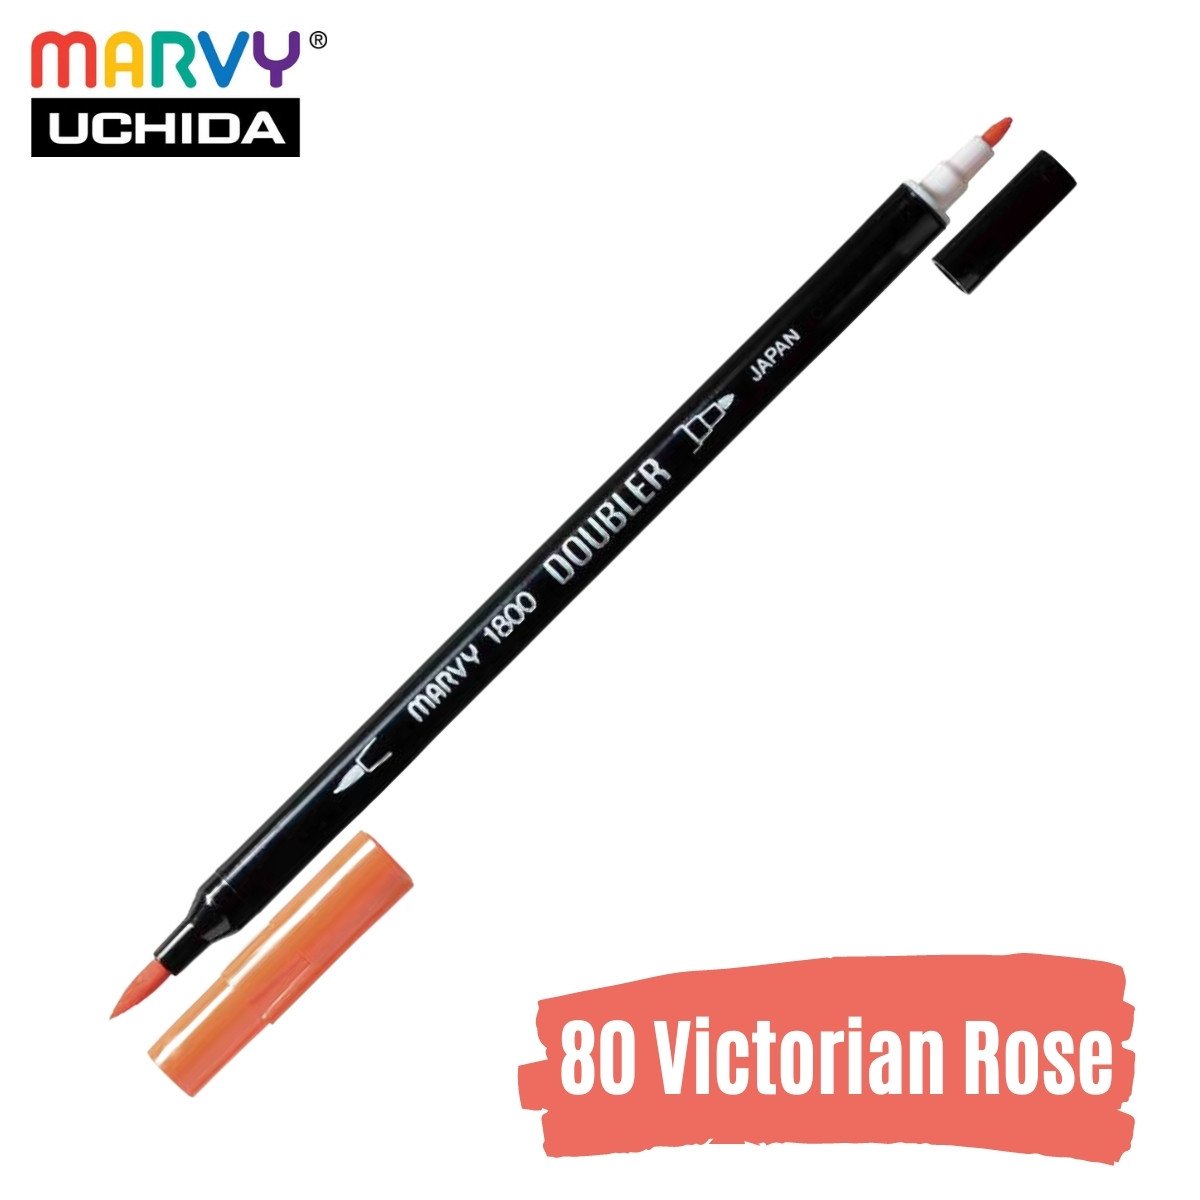 Marvy Artist Brush Pen 1800 Çift Taraflı Firça Uçlu Kalem 80 Victorian Rose